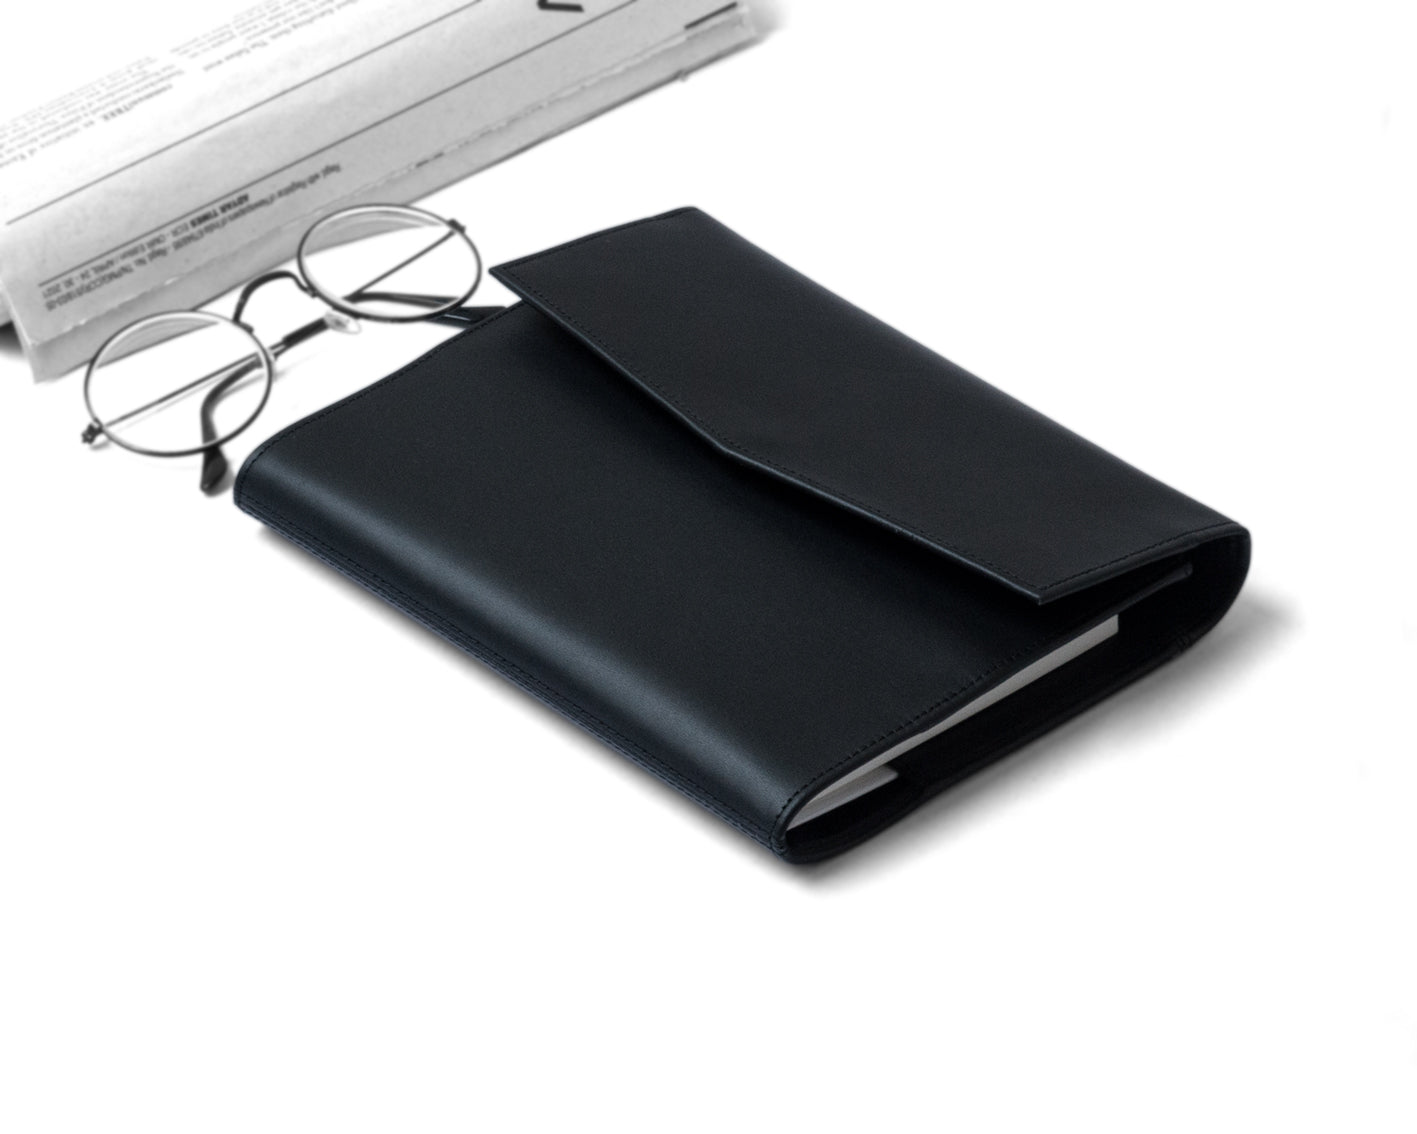 Executive Leather Diary - Black